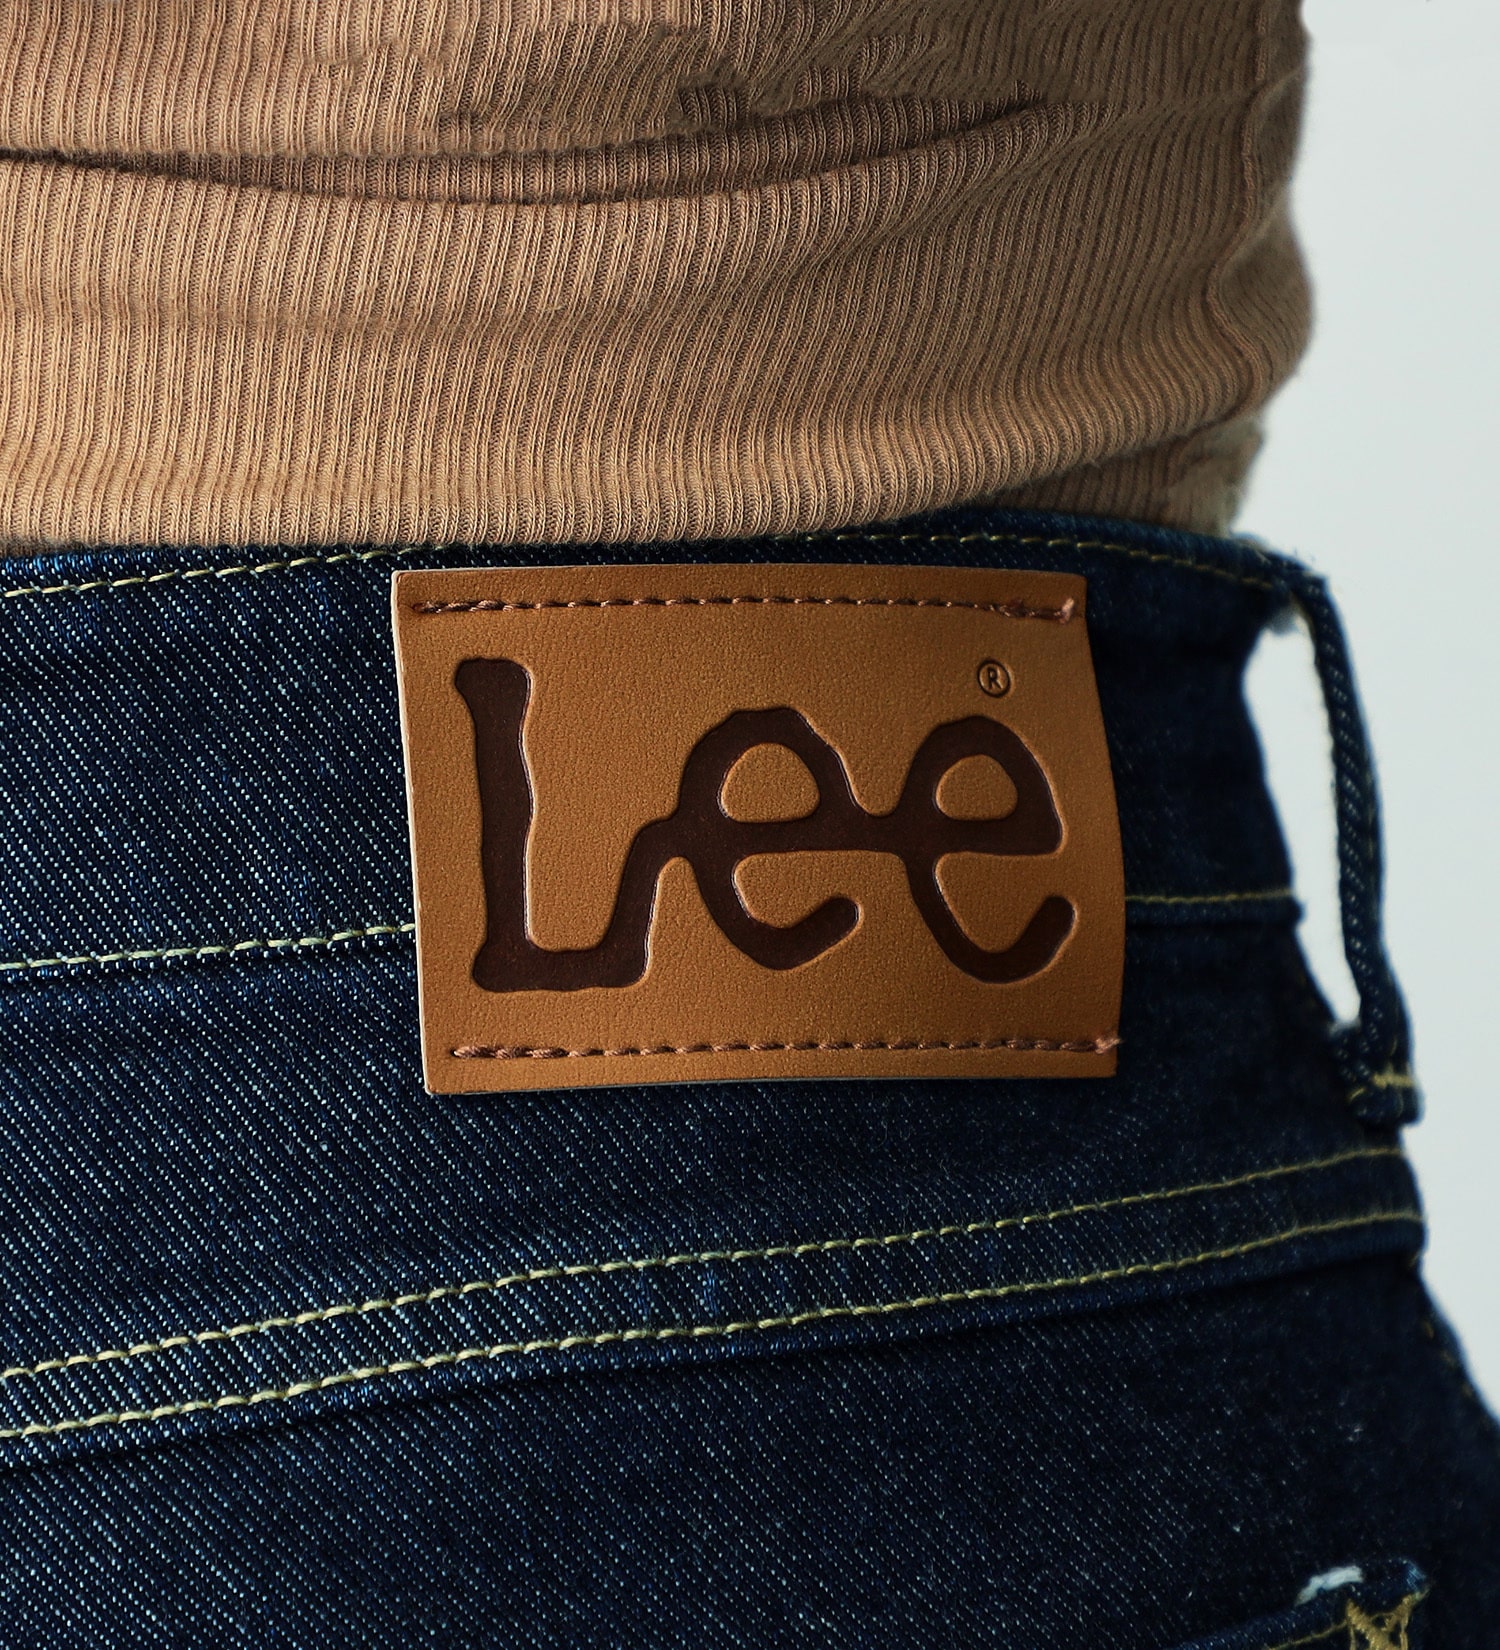 Lee(リー)の【GW SALE】【Lee BABE】フレアパンツ|パンツ/デニムパンツ/レディース|濃色ブルー